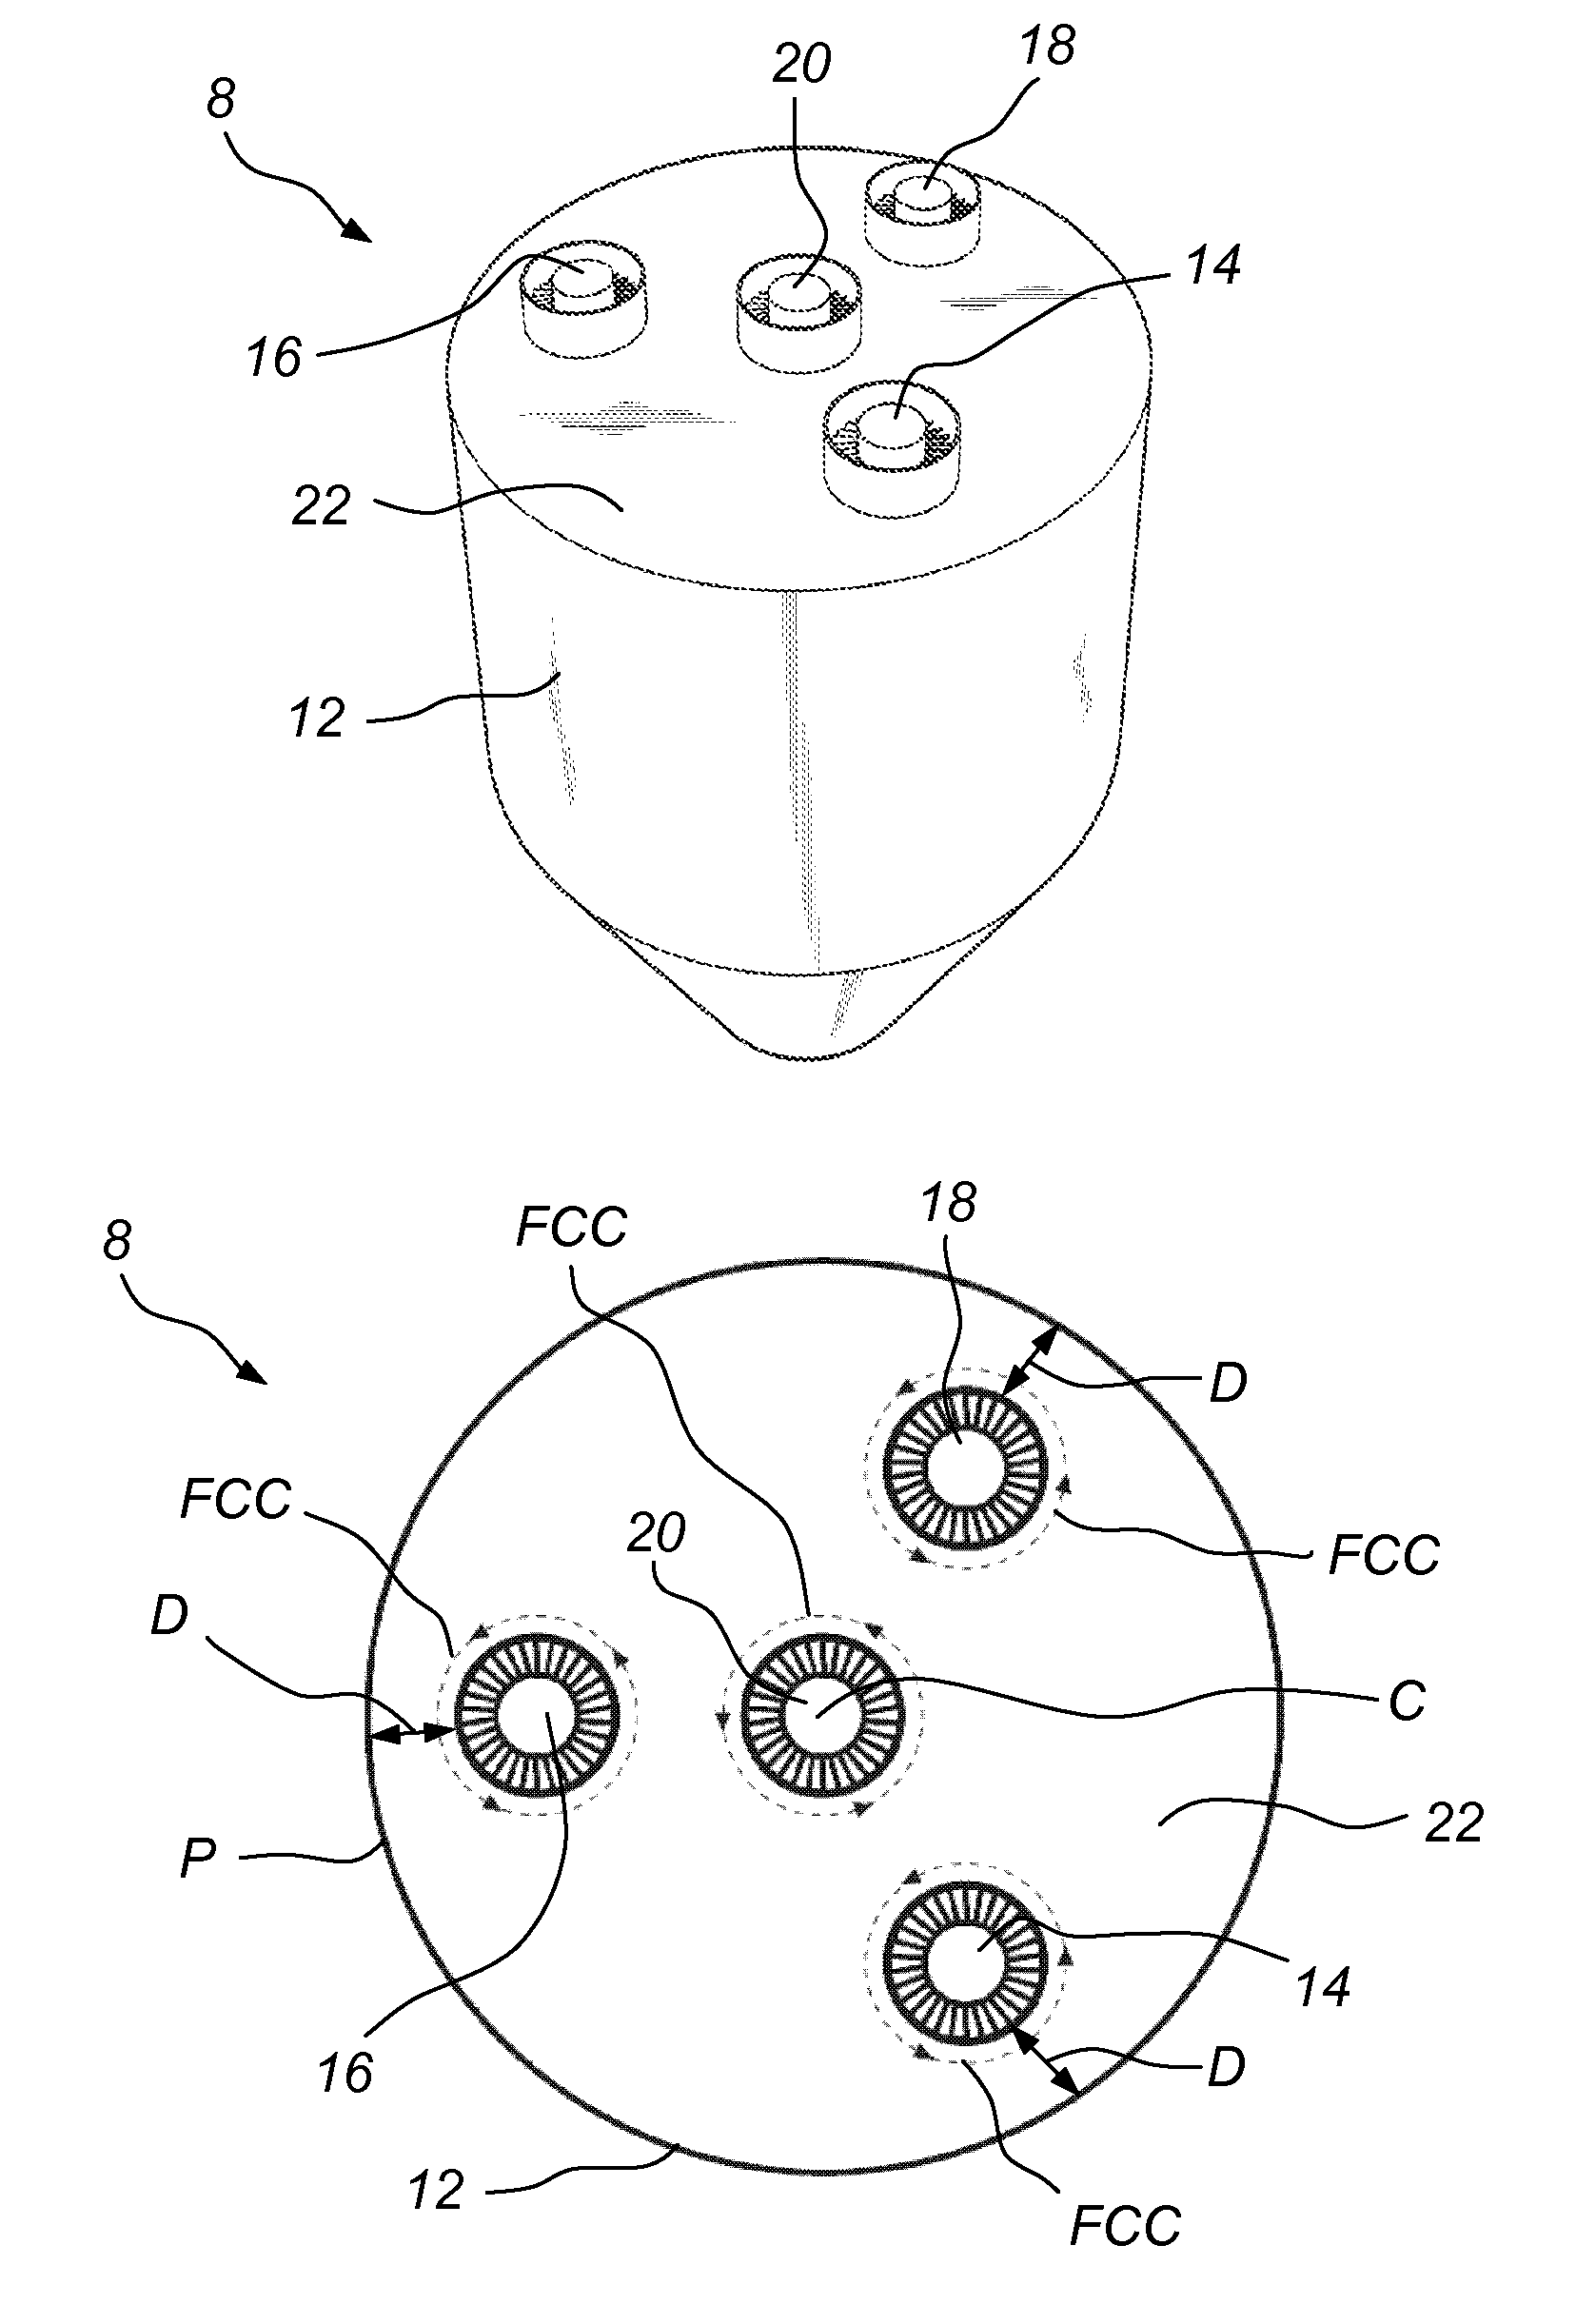 Disperser arrangement for a spray dryer absorber